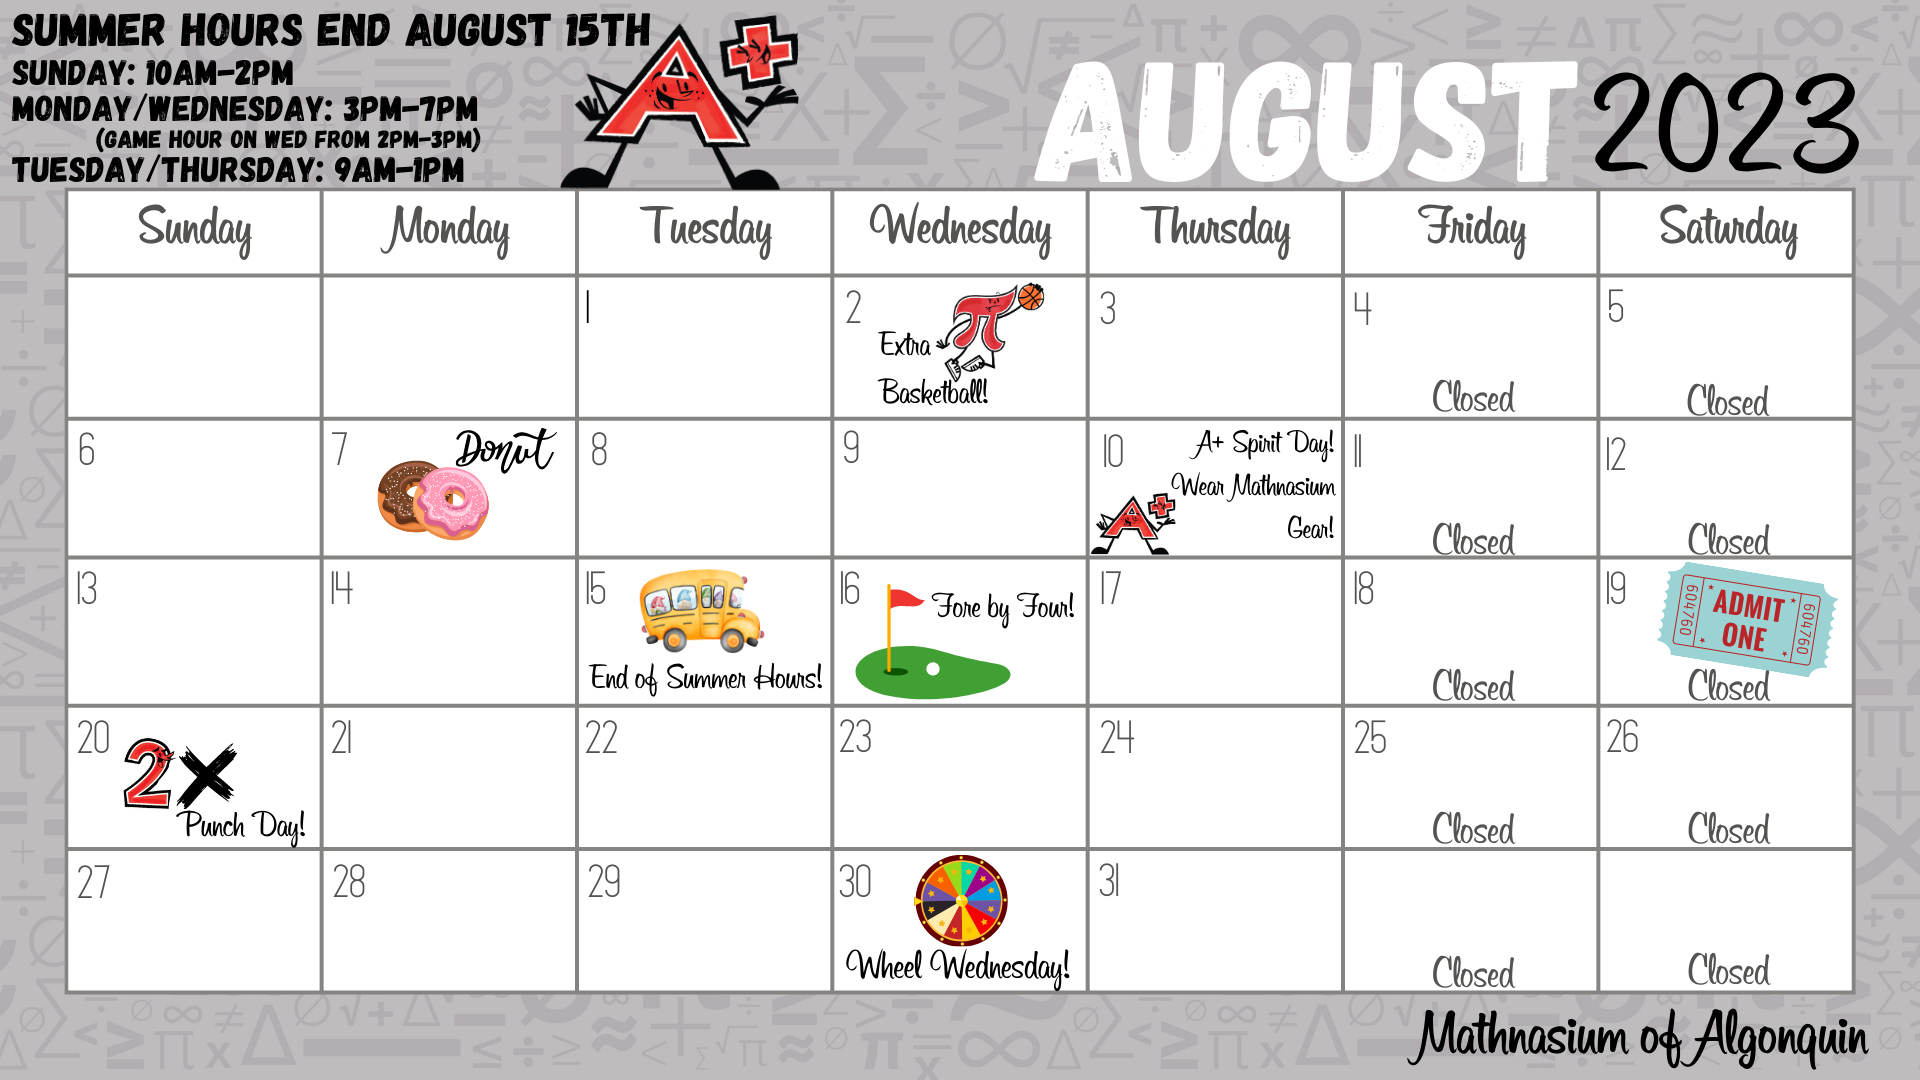 August's Fun Calendar!